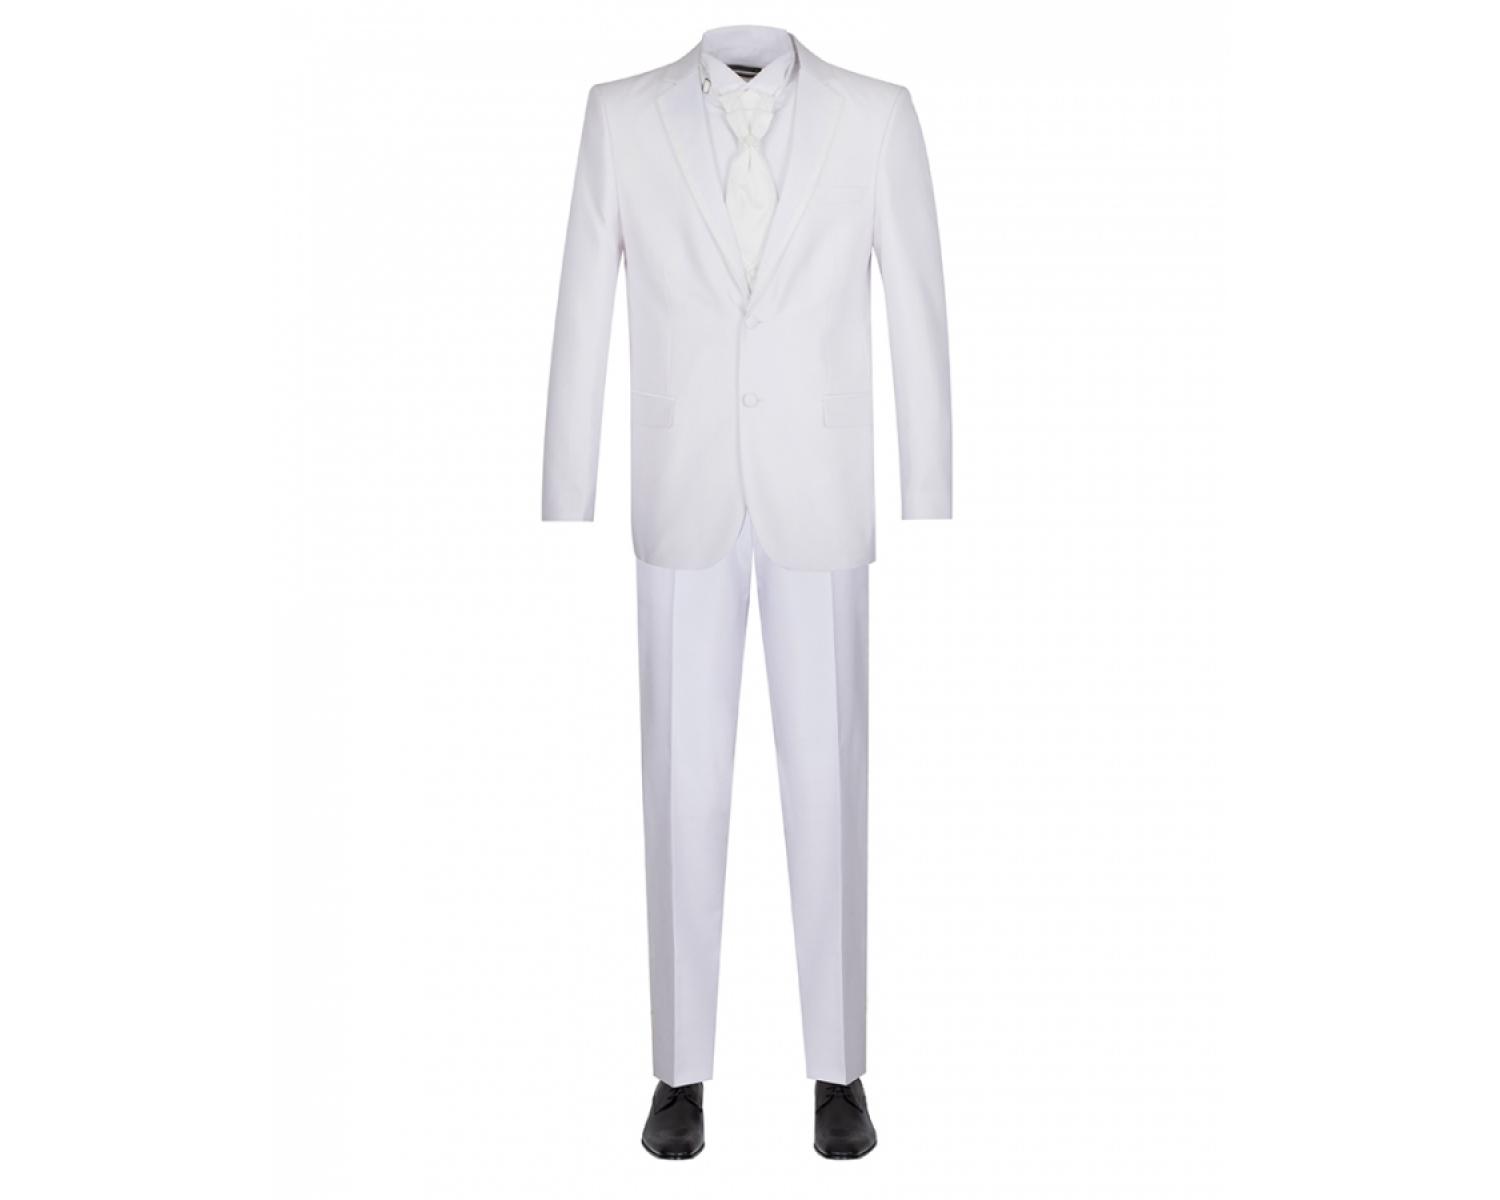 Mens White Wedding Suit - Men S Five Piece White Wedding Suit With ...